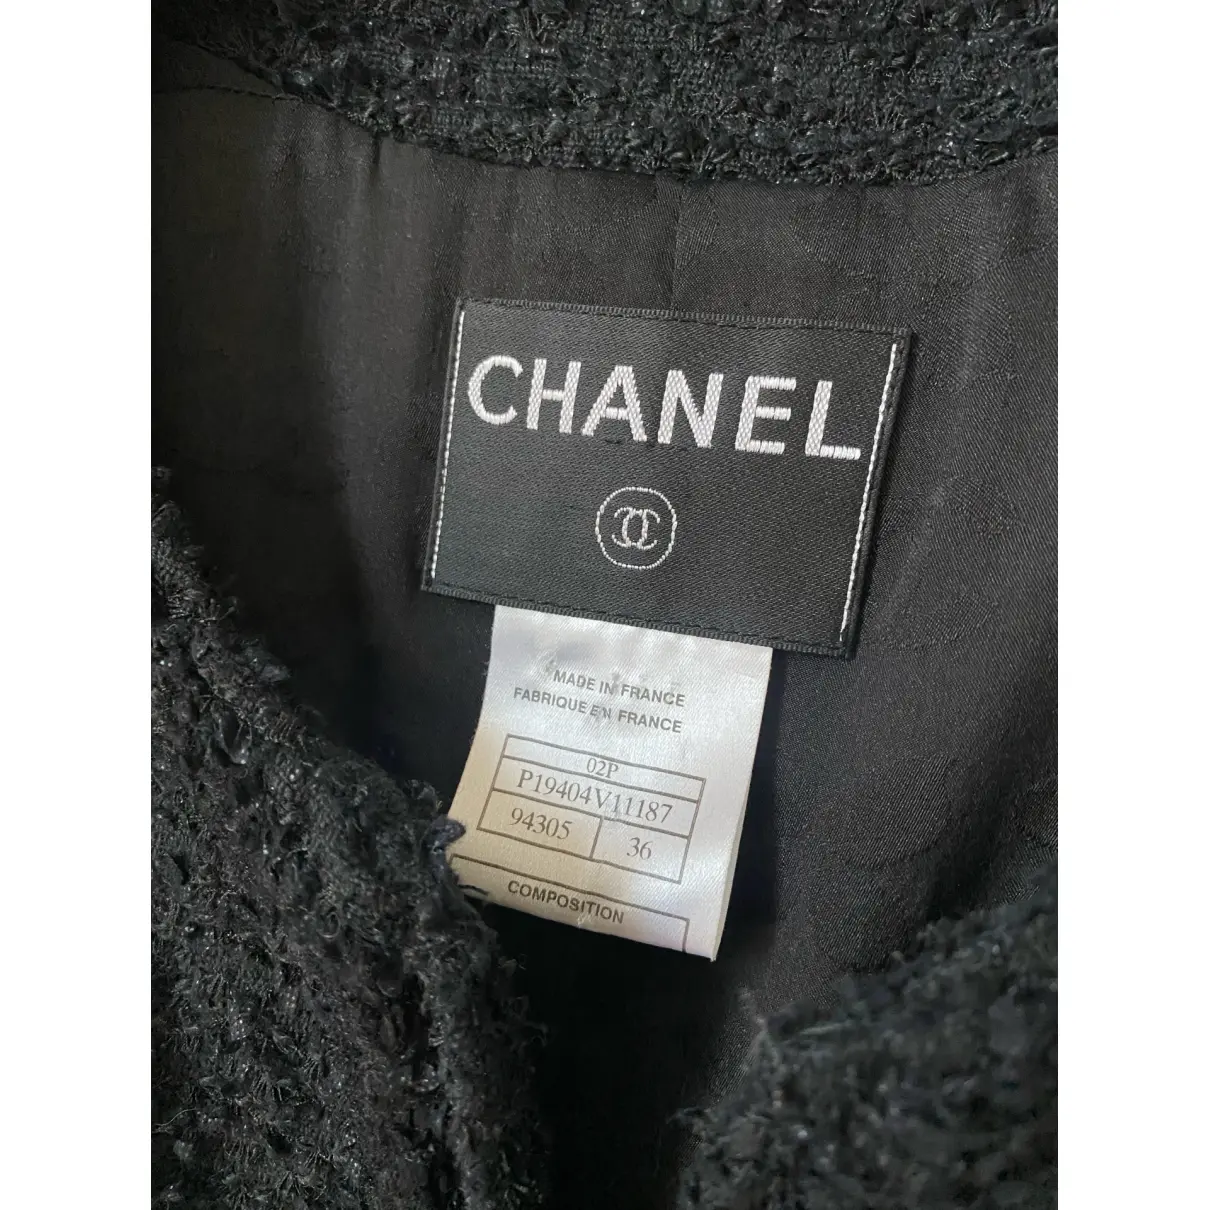 Buy Chanel La Petite Veste Noire tweed jacket online - Vintage